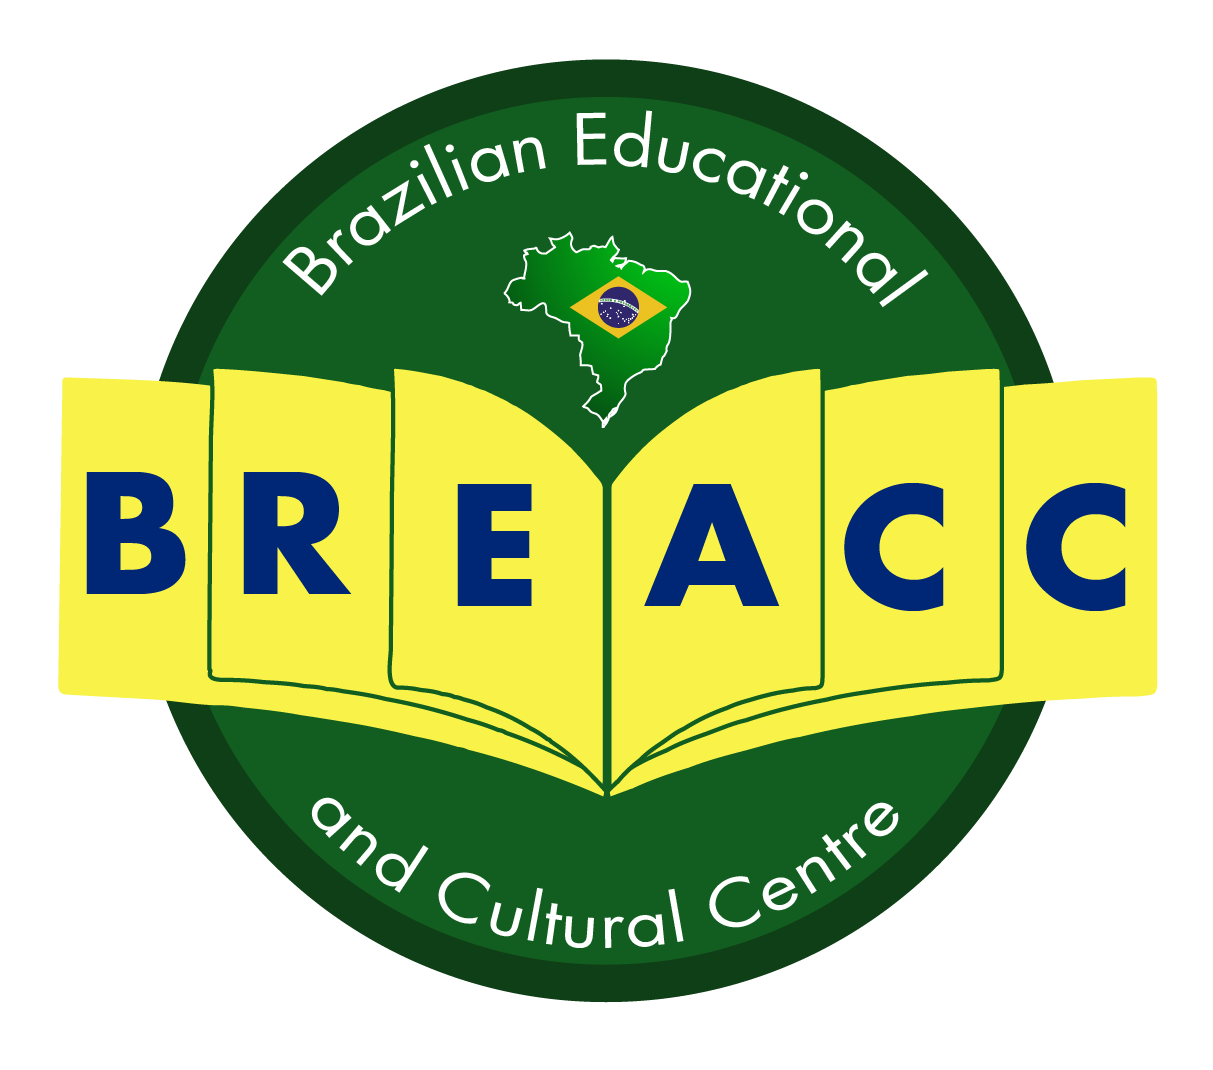 breacc-logo